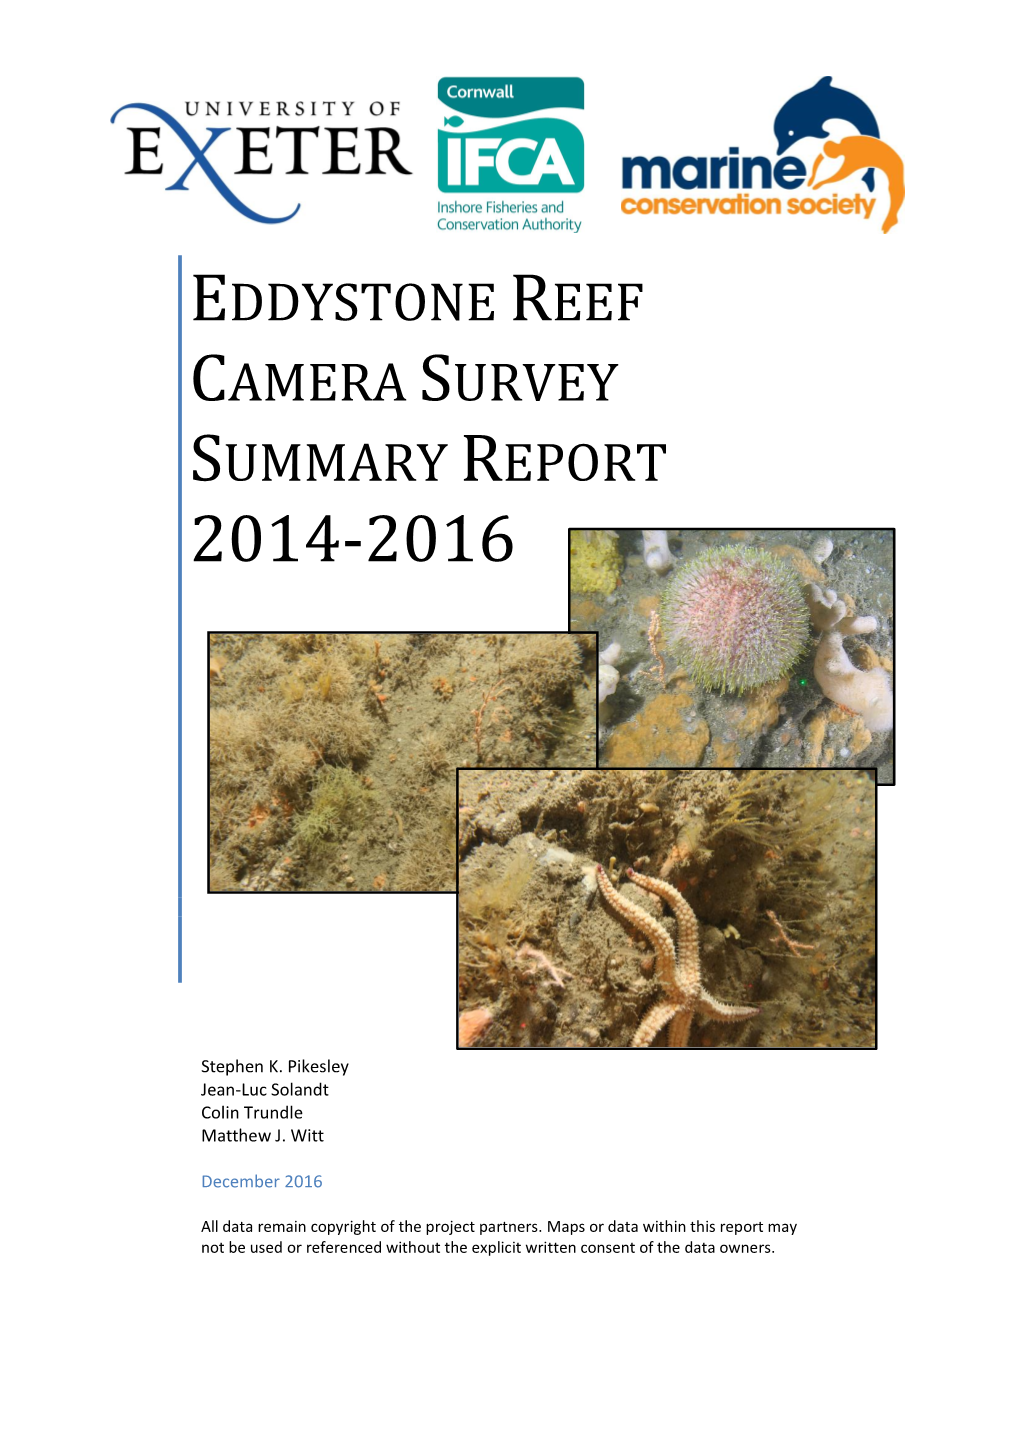 Eddystone Reef Camera Survey Summary Report 2014-2016